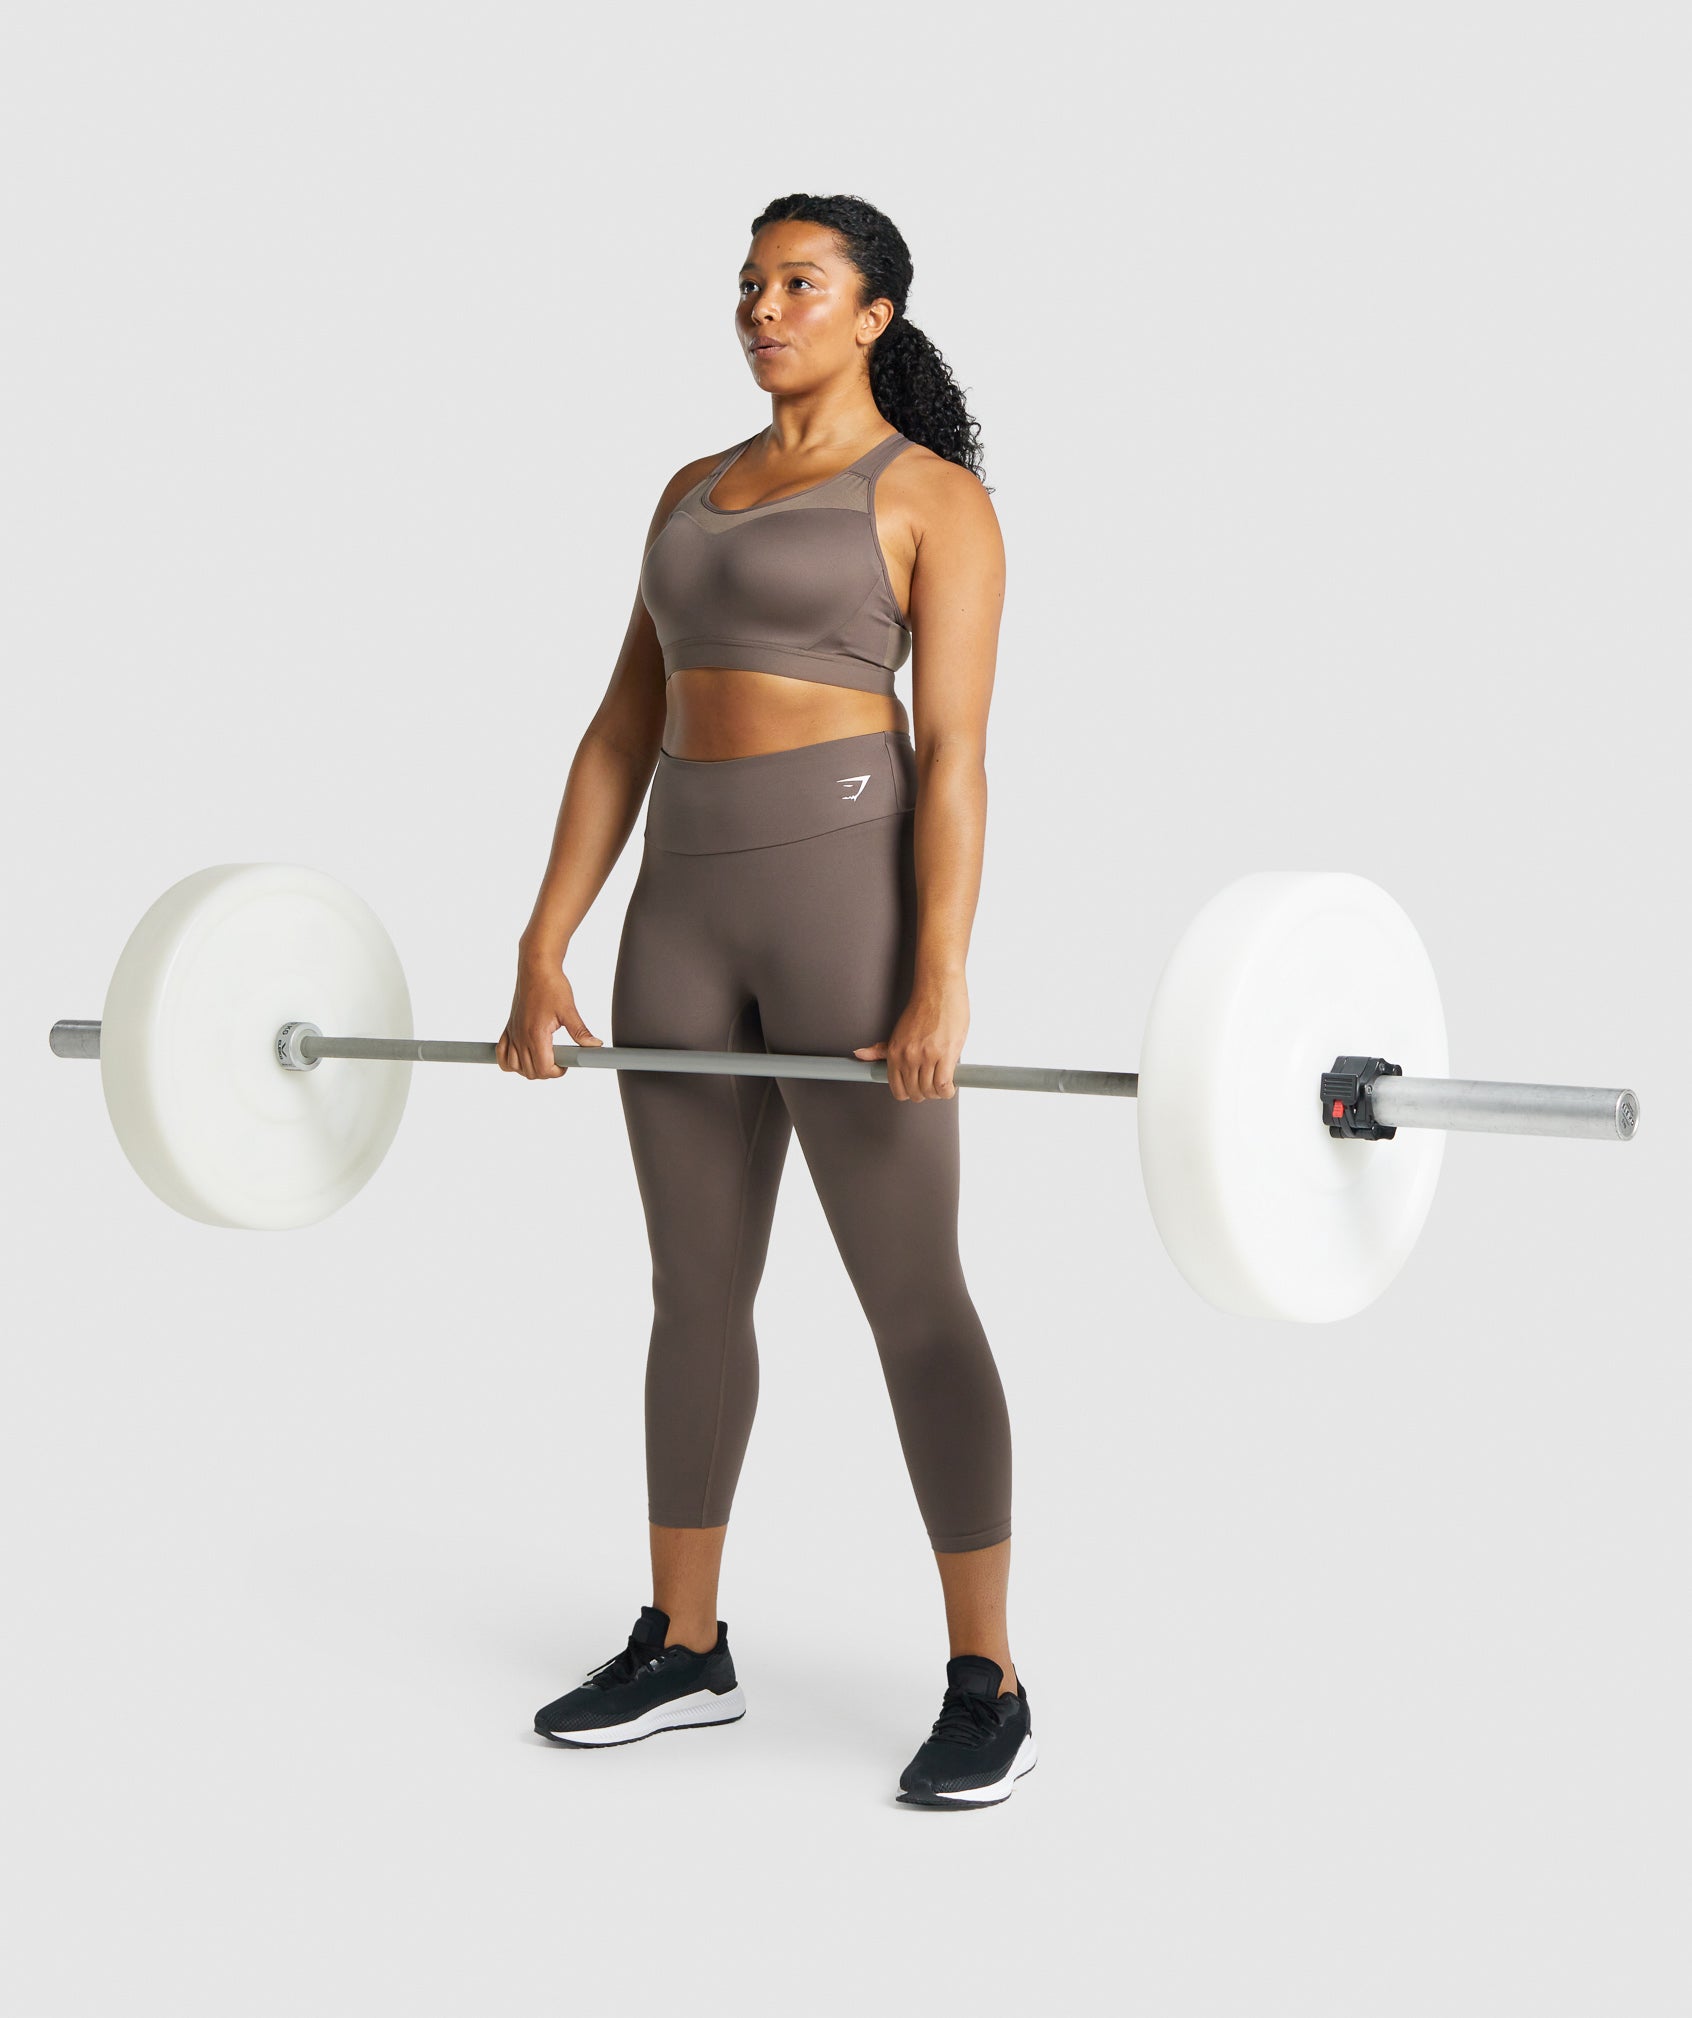 Gymshark 7/8 Womens Training Tights - Black – Start Fitness